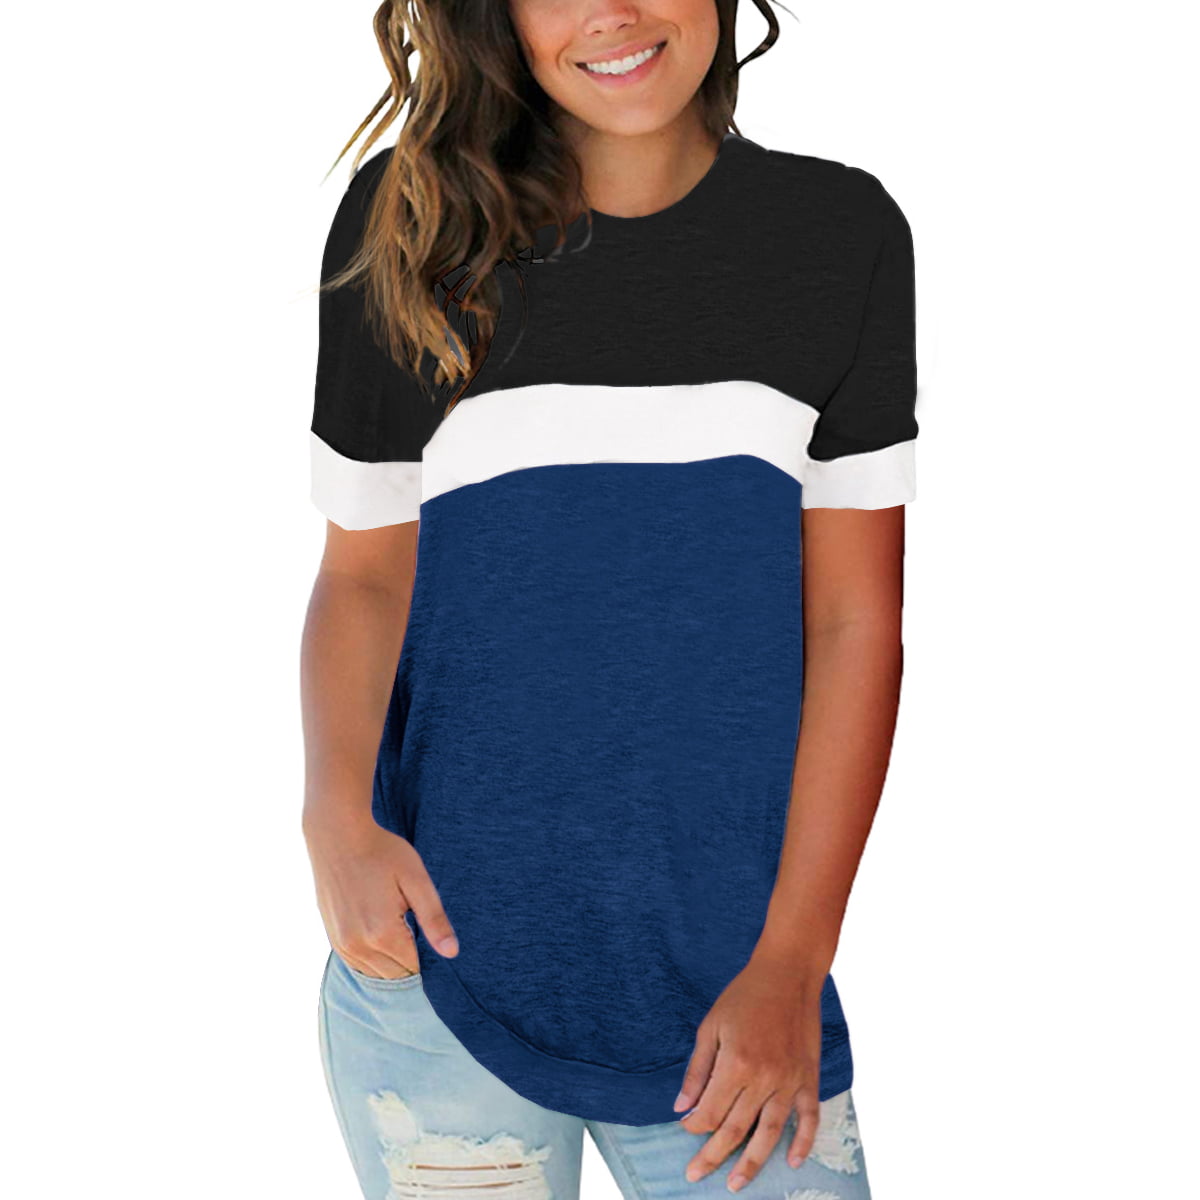 Aleumdr Women's Short Sleeve Crew Neck T Shirts Color Block Tops with Pocket S-XXL 